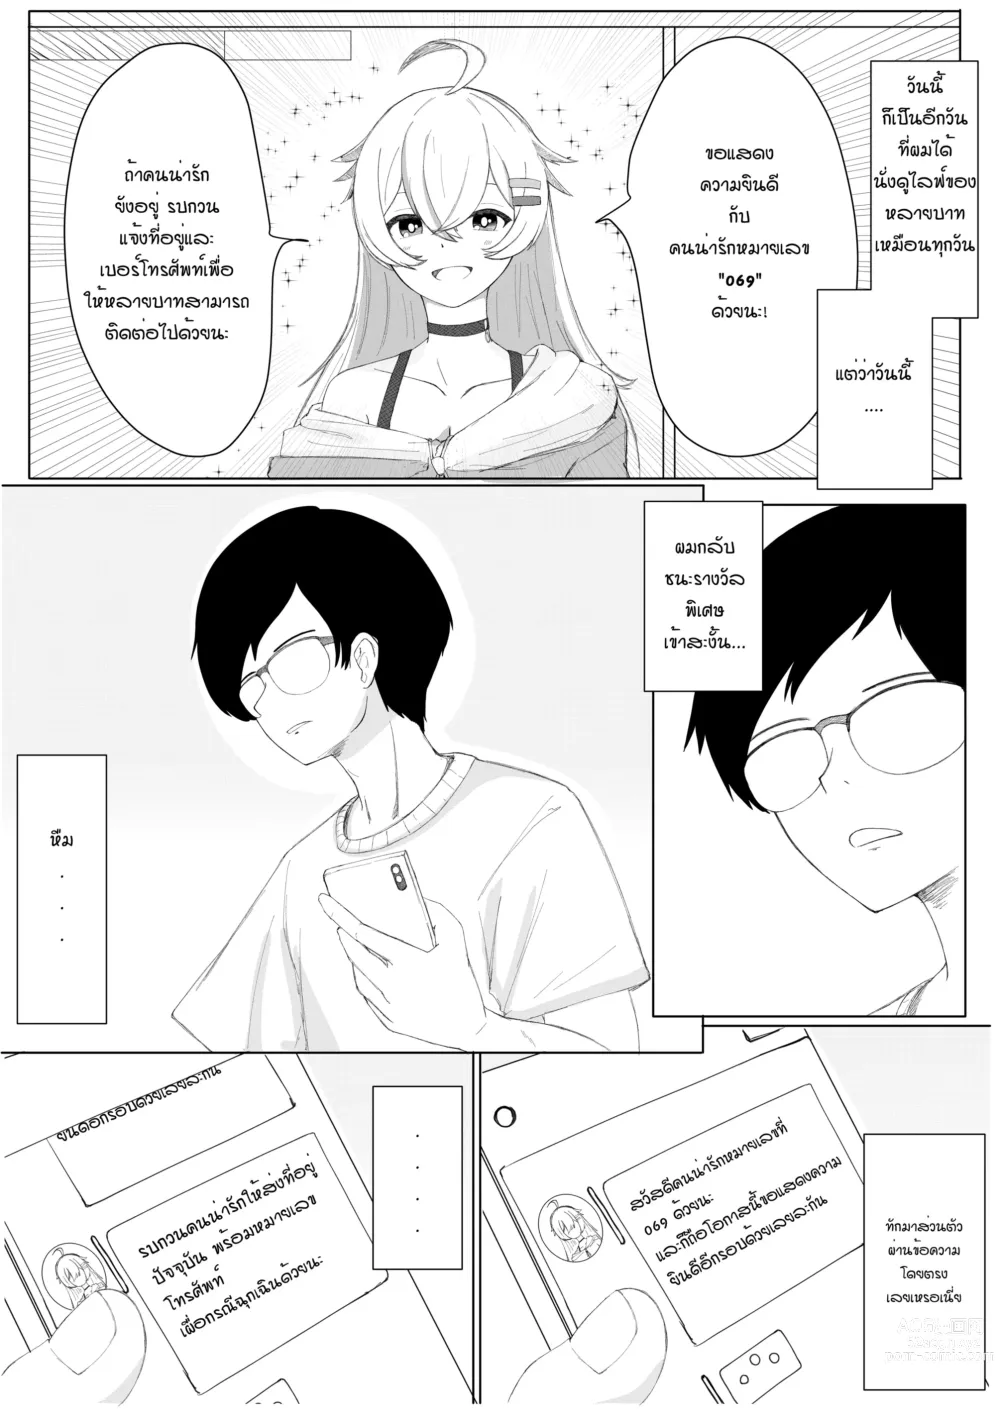 Page 1 of doujinshi ห้ามช่วยตัวเอง